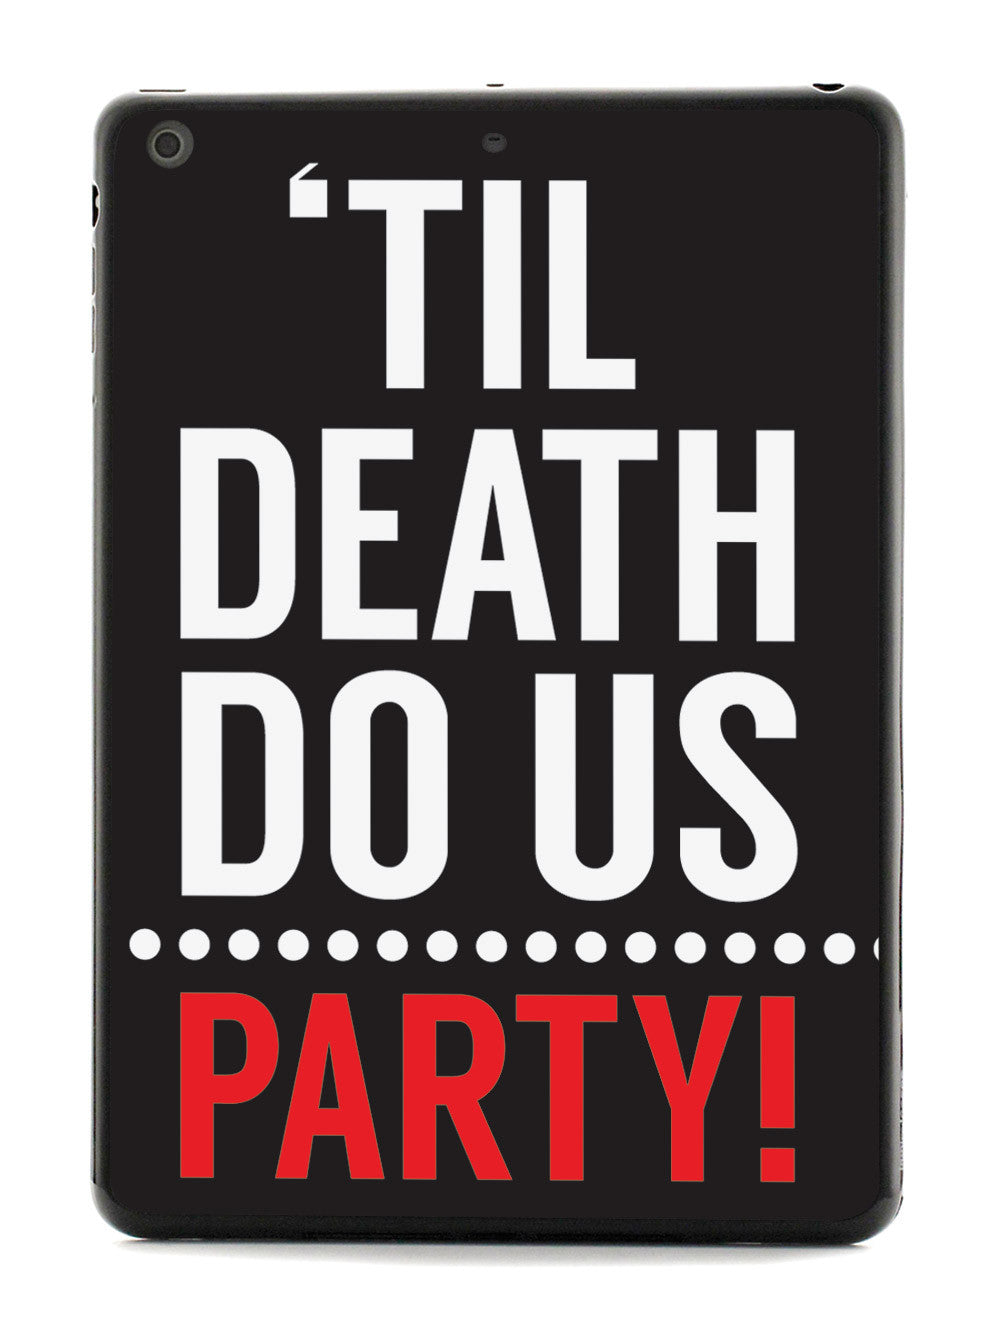 Til Death do us.. PARTY! Case